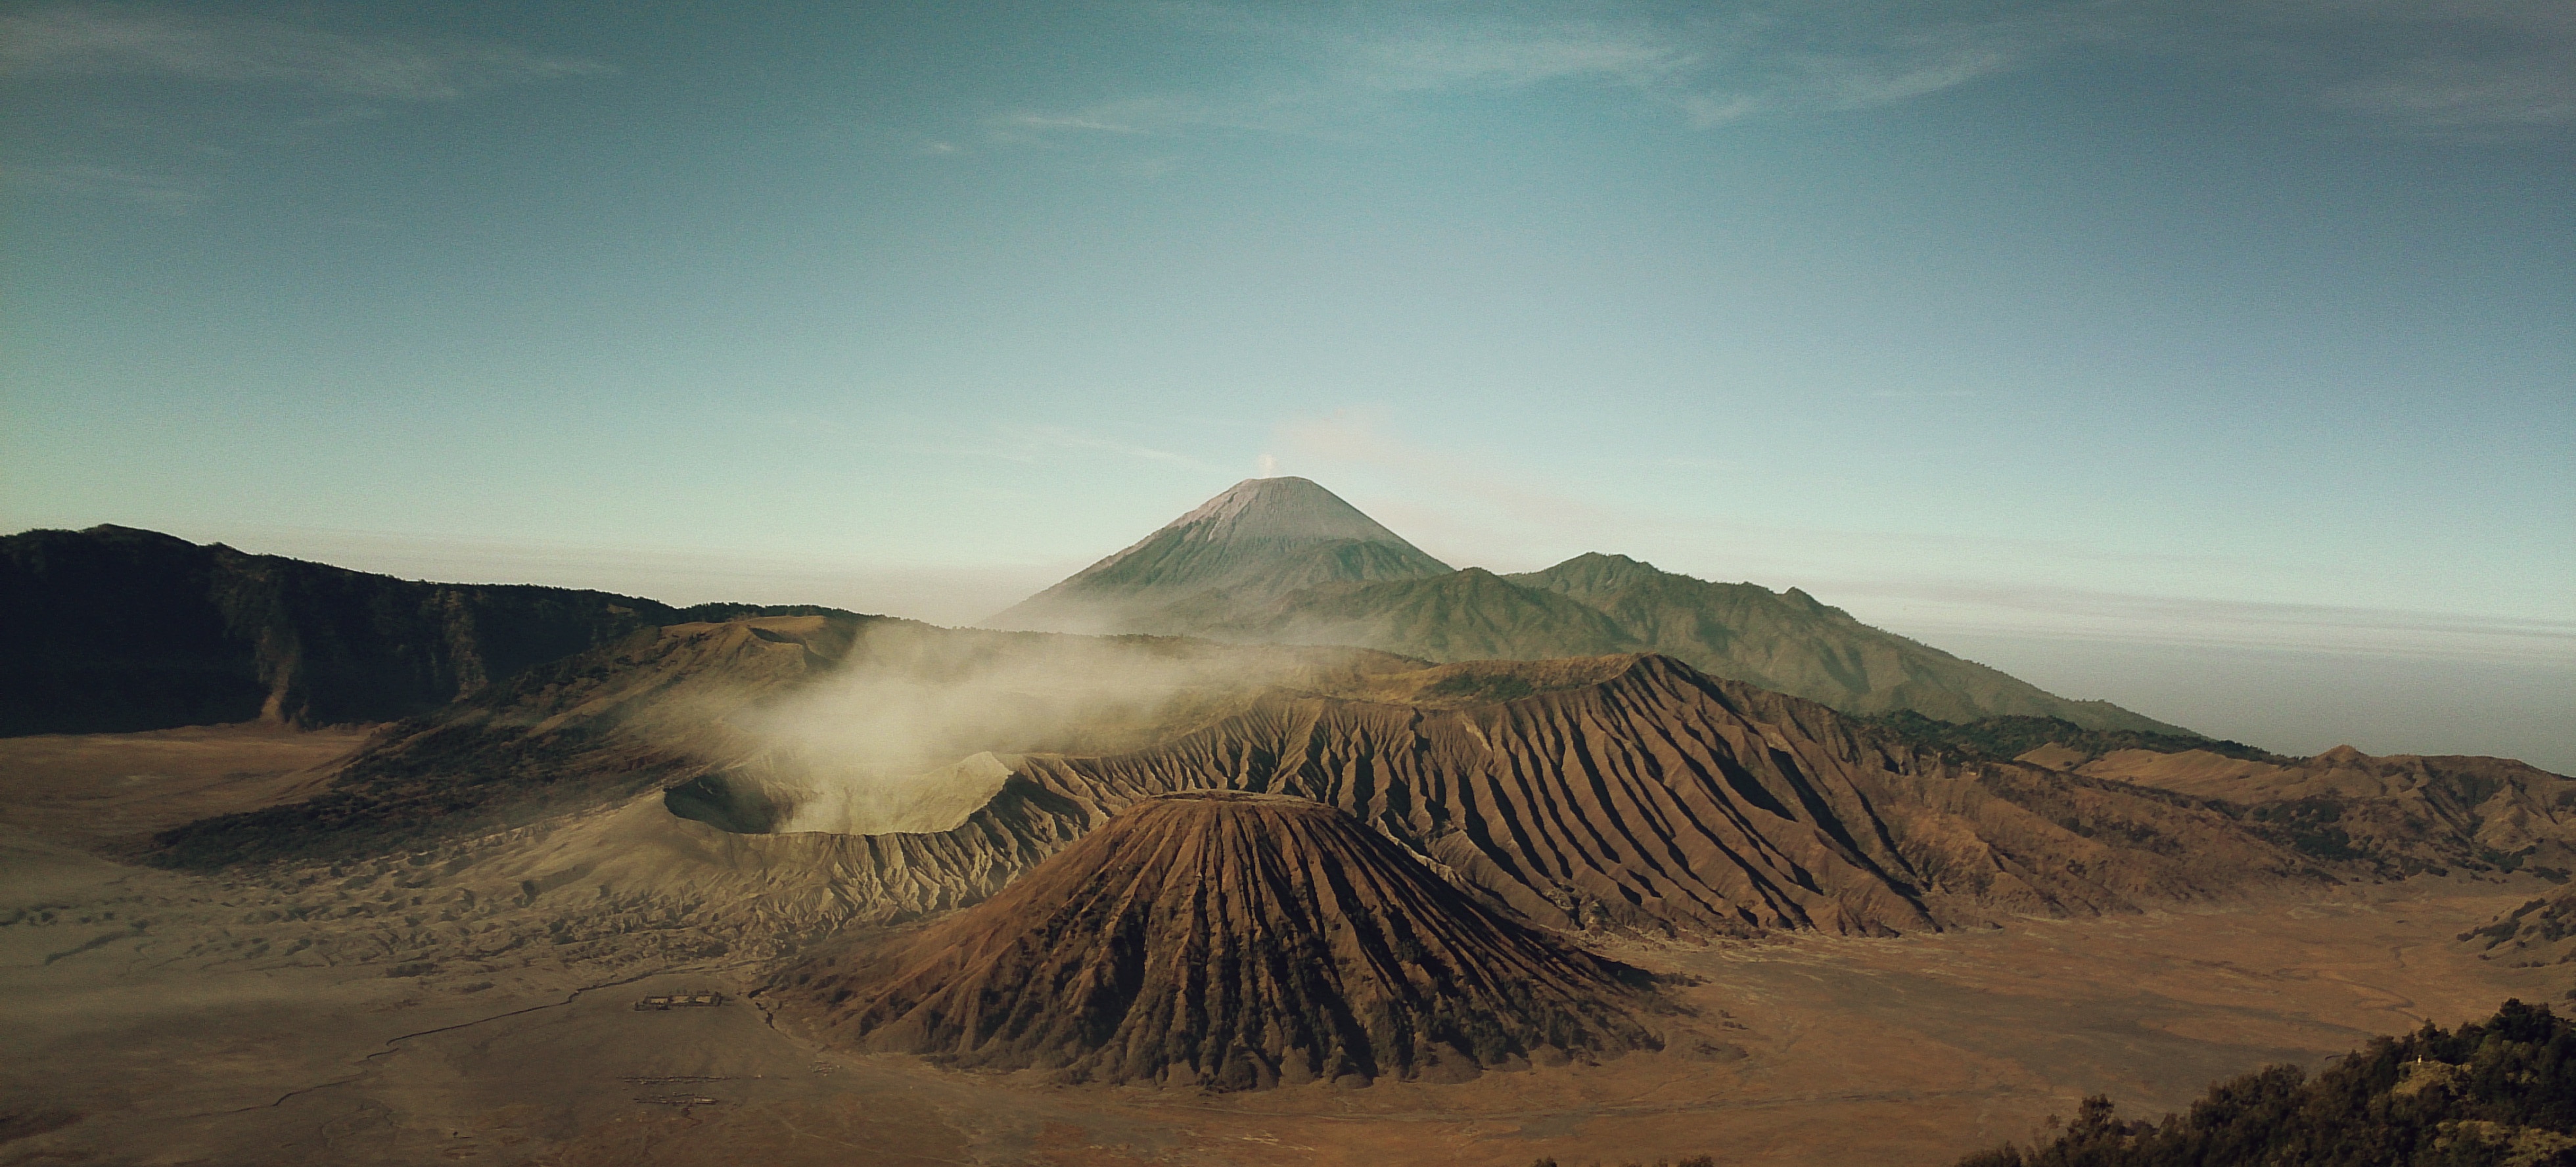 374060 descargar imagen tierra/naturaleza, monte bromo, indonesia, montaña, volcán, volcanes: fondos de pantalla y protectores de pantalla gratis